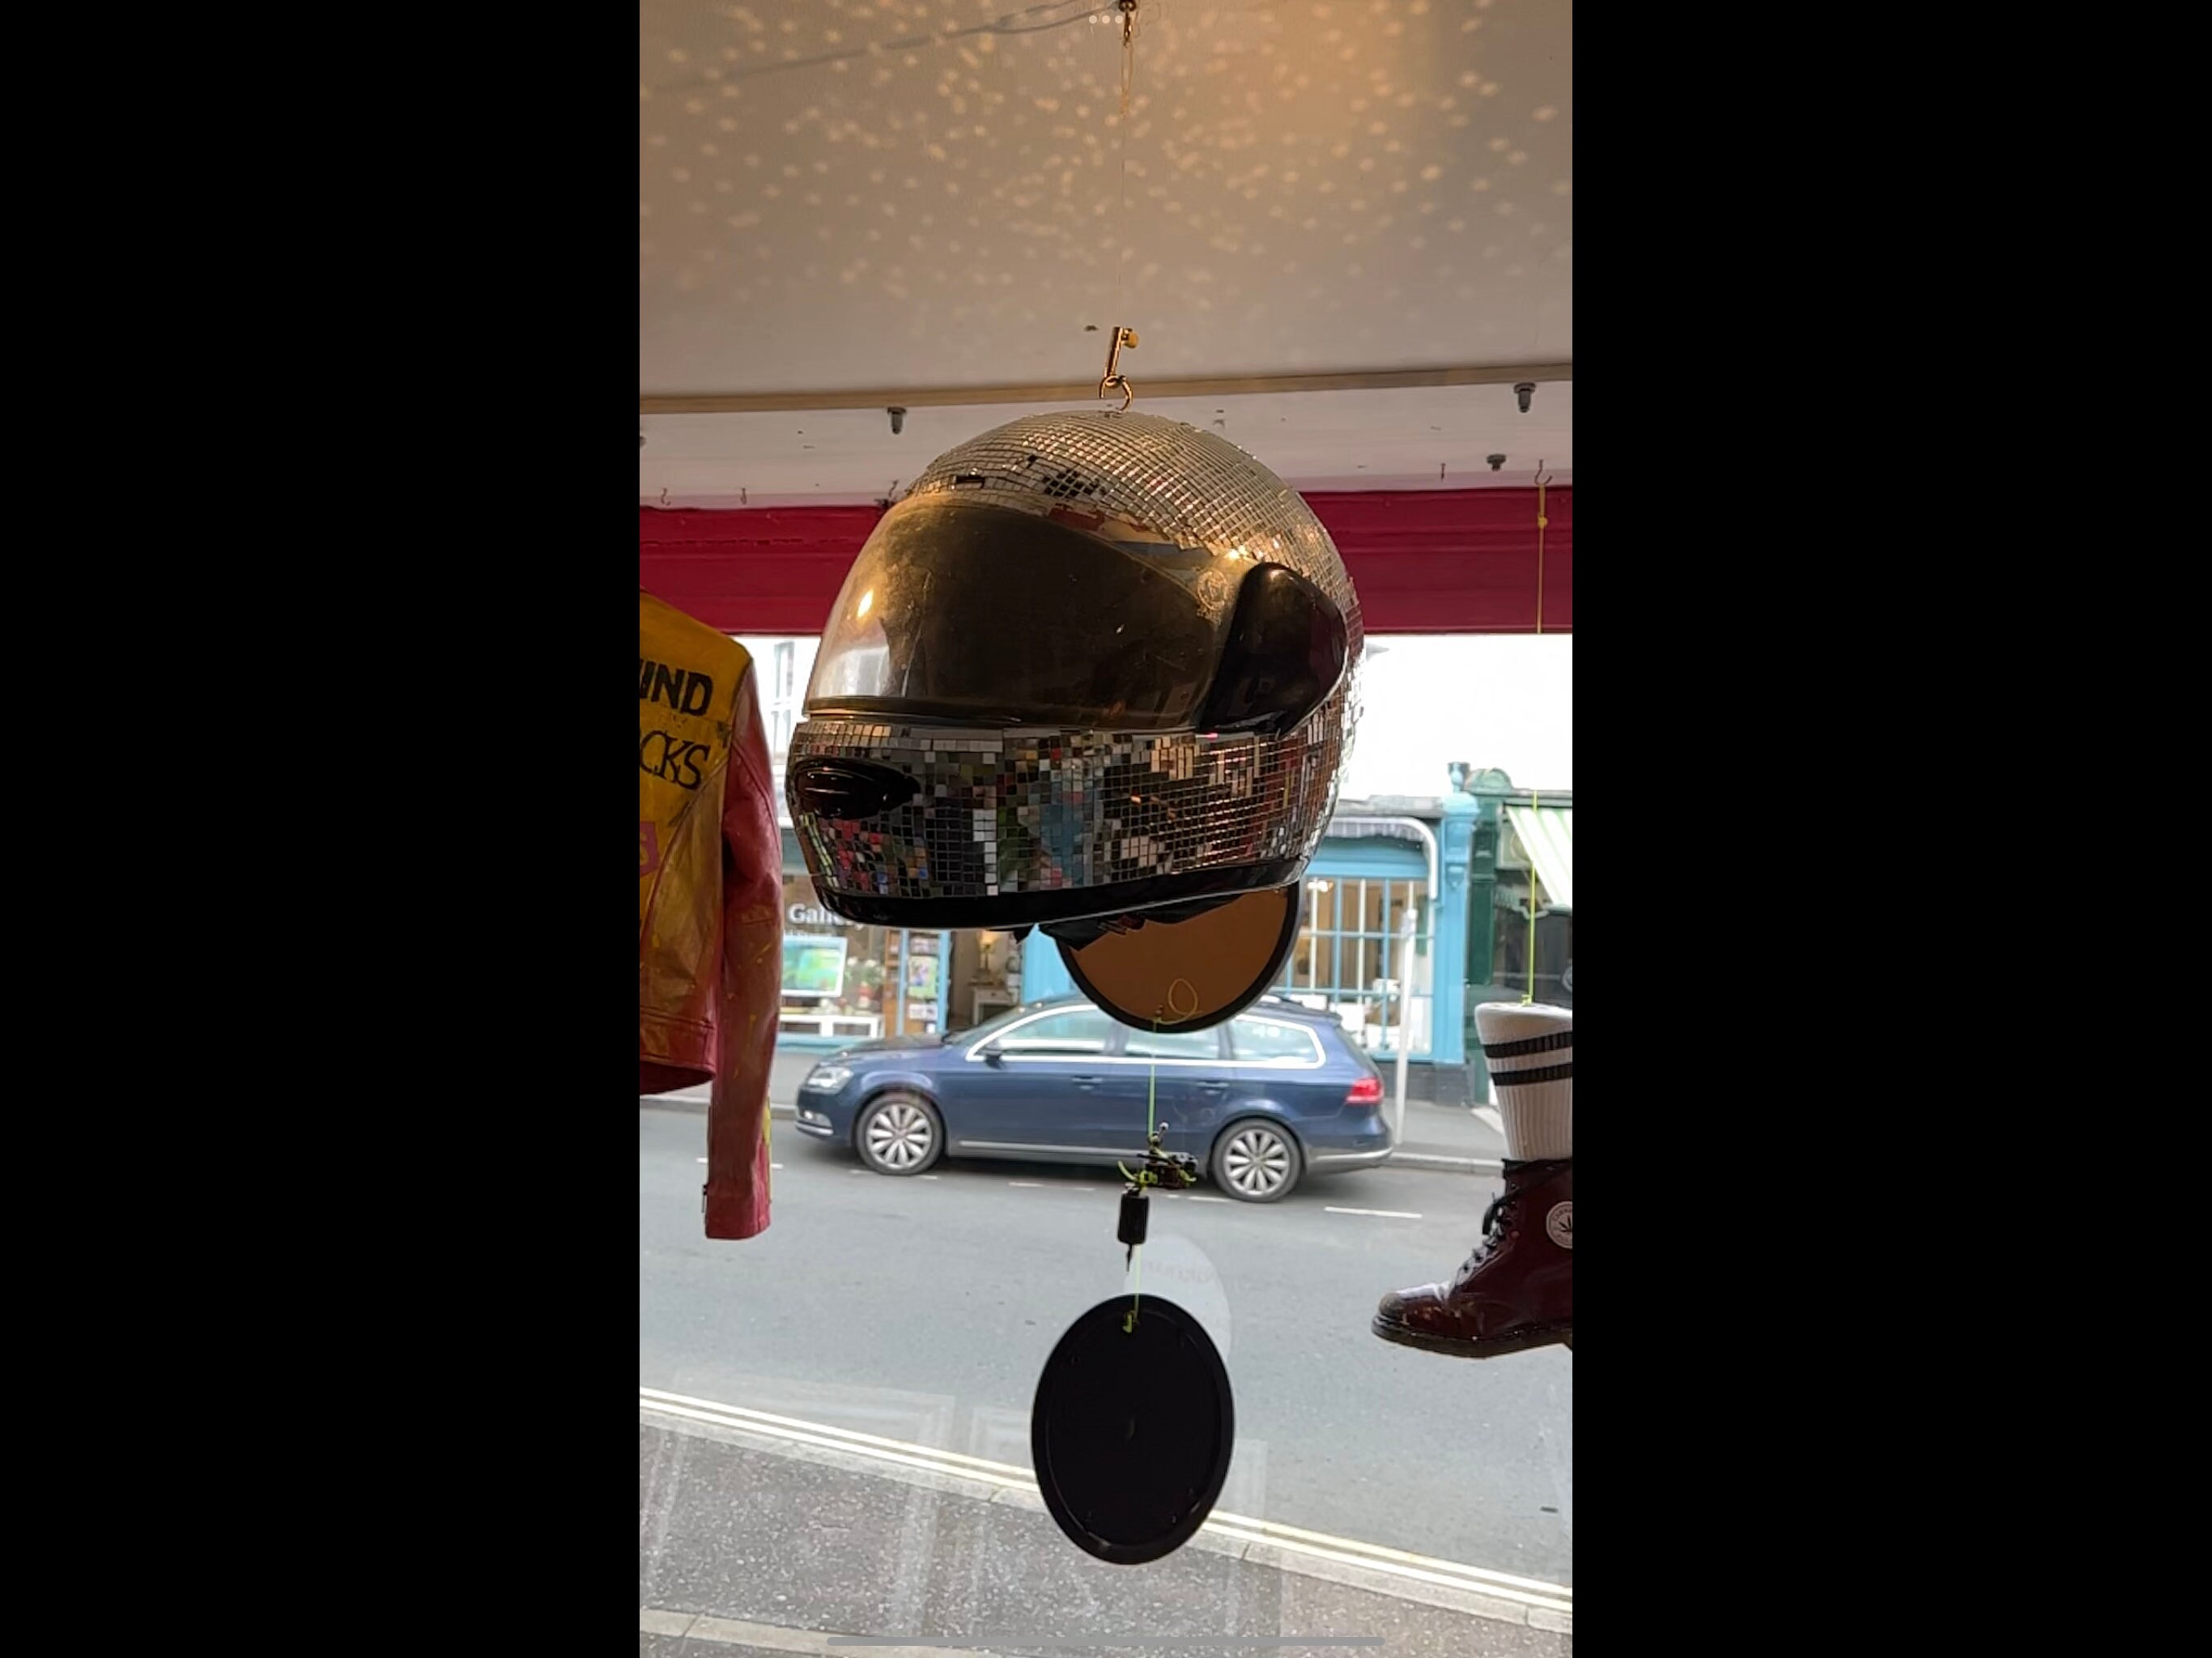 Disco Ball Helmet -  UK